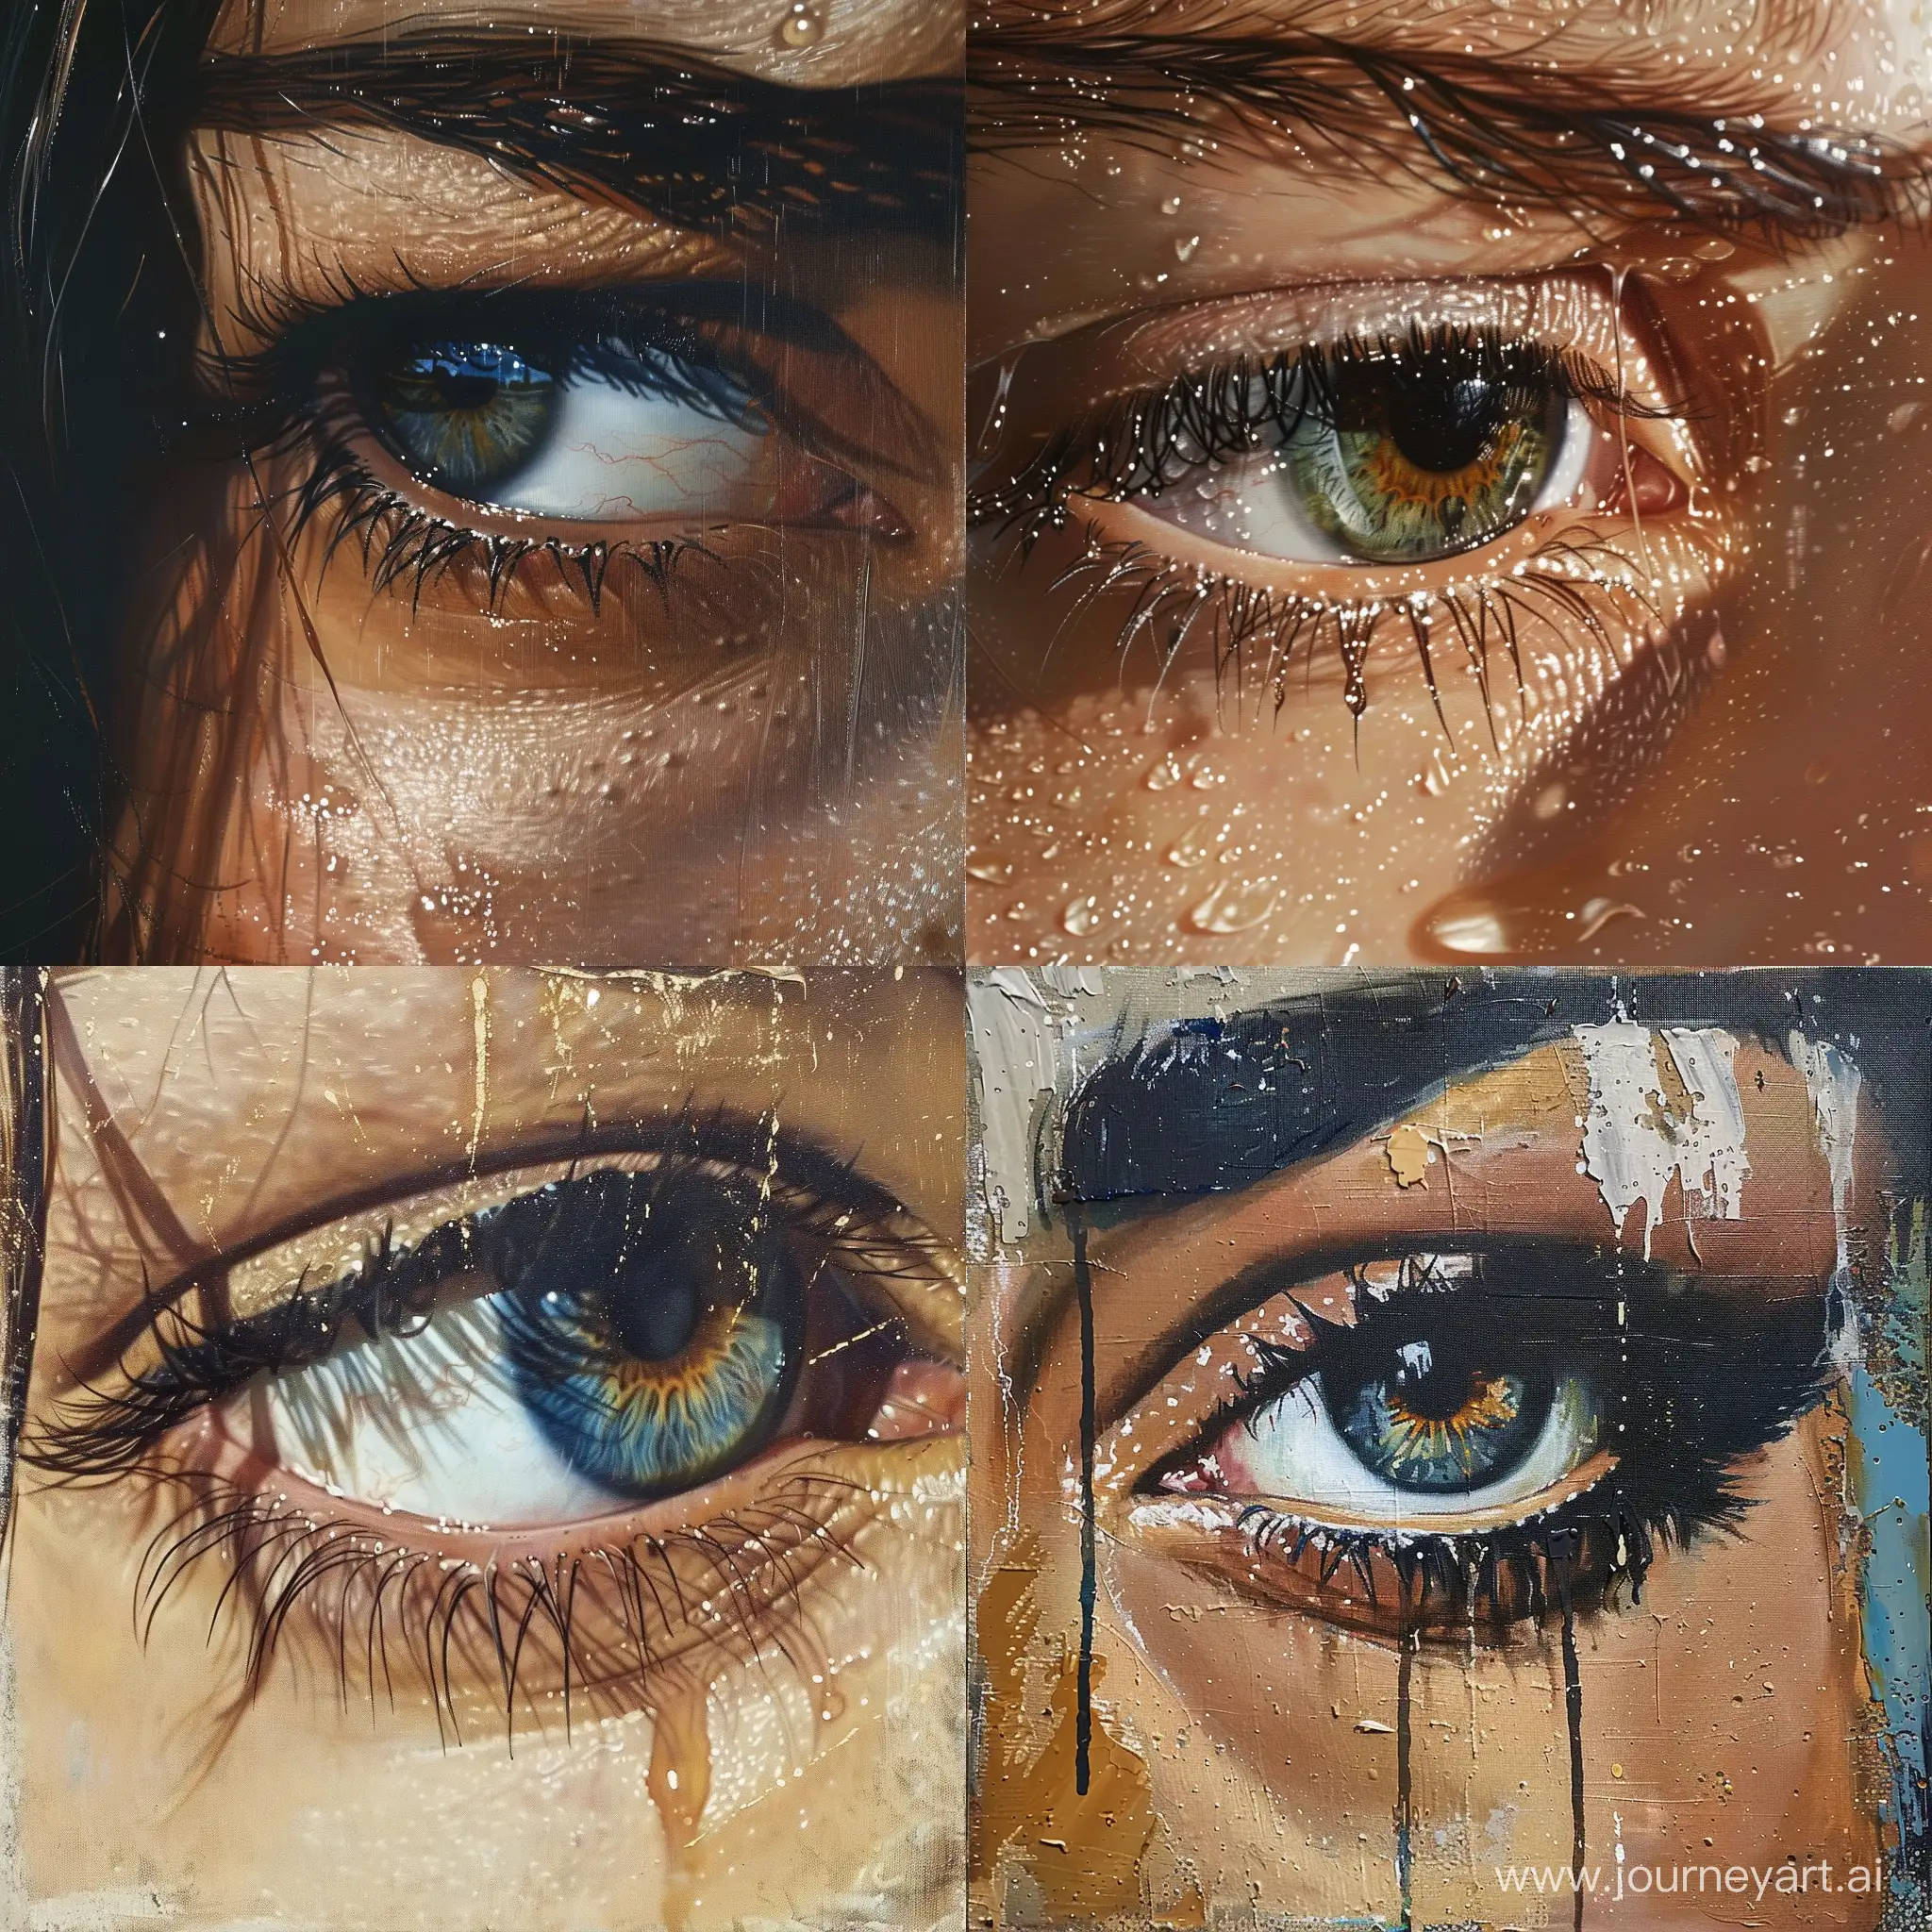 Crying-Woman-Eye-Artwork-in-11-Aspect-Ratio